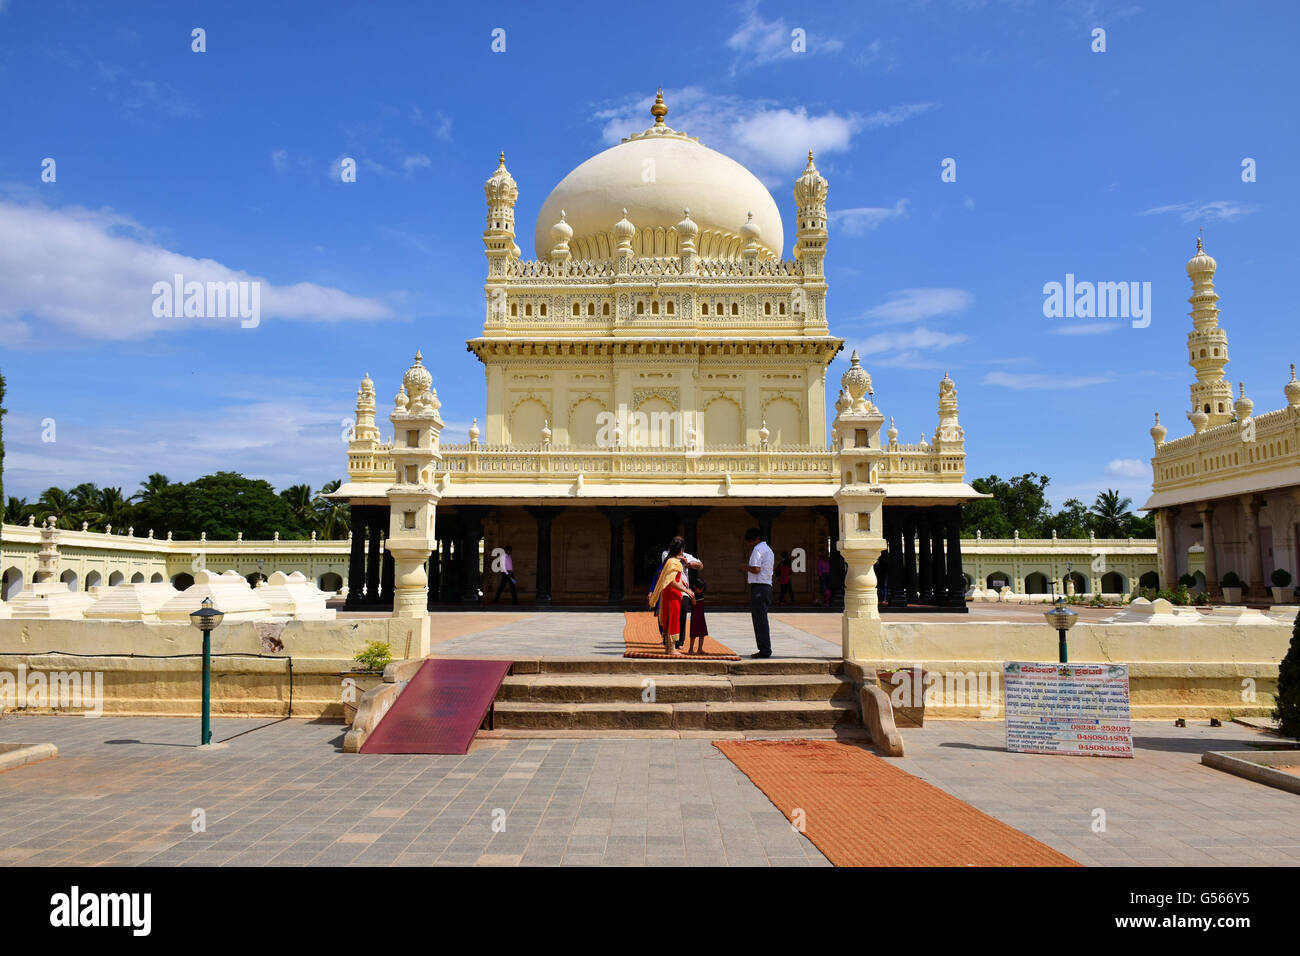 La Gumbaz en Srirangapatnam mausoleo es una celebración de la tumba de Tipu Sultan & Hyder Ali. Foto de stock